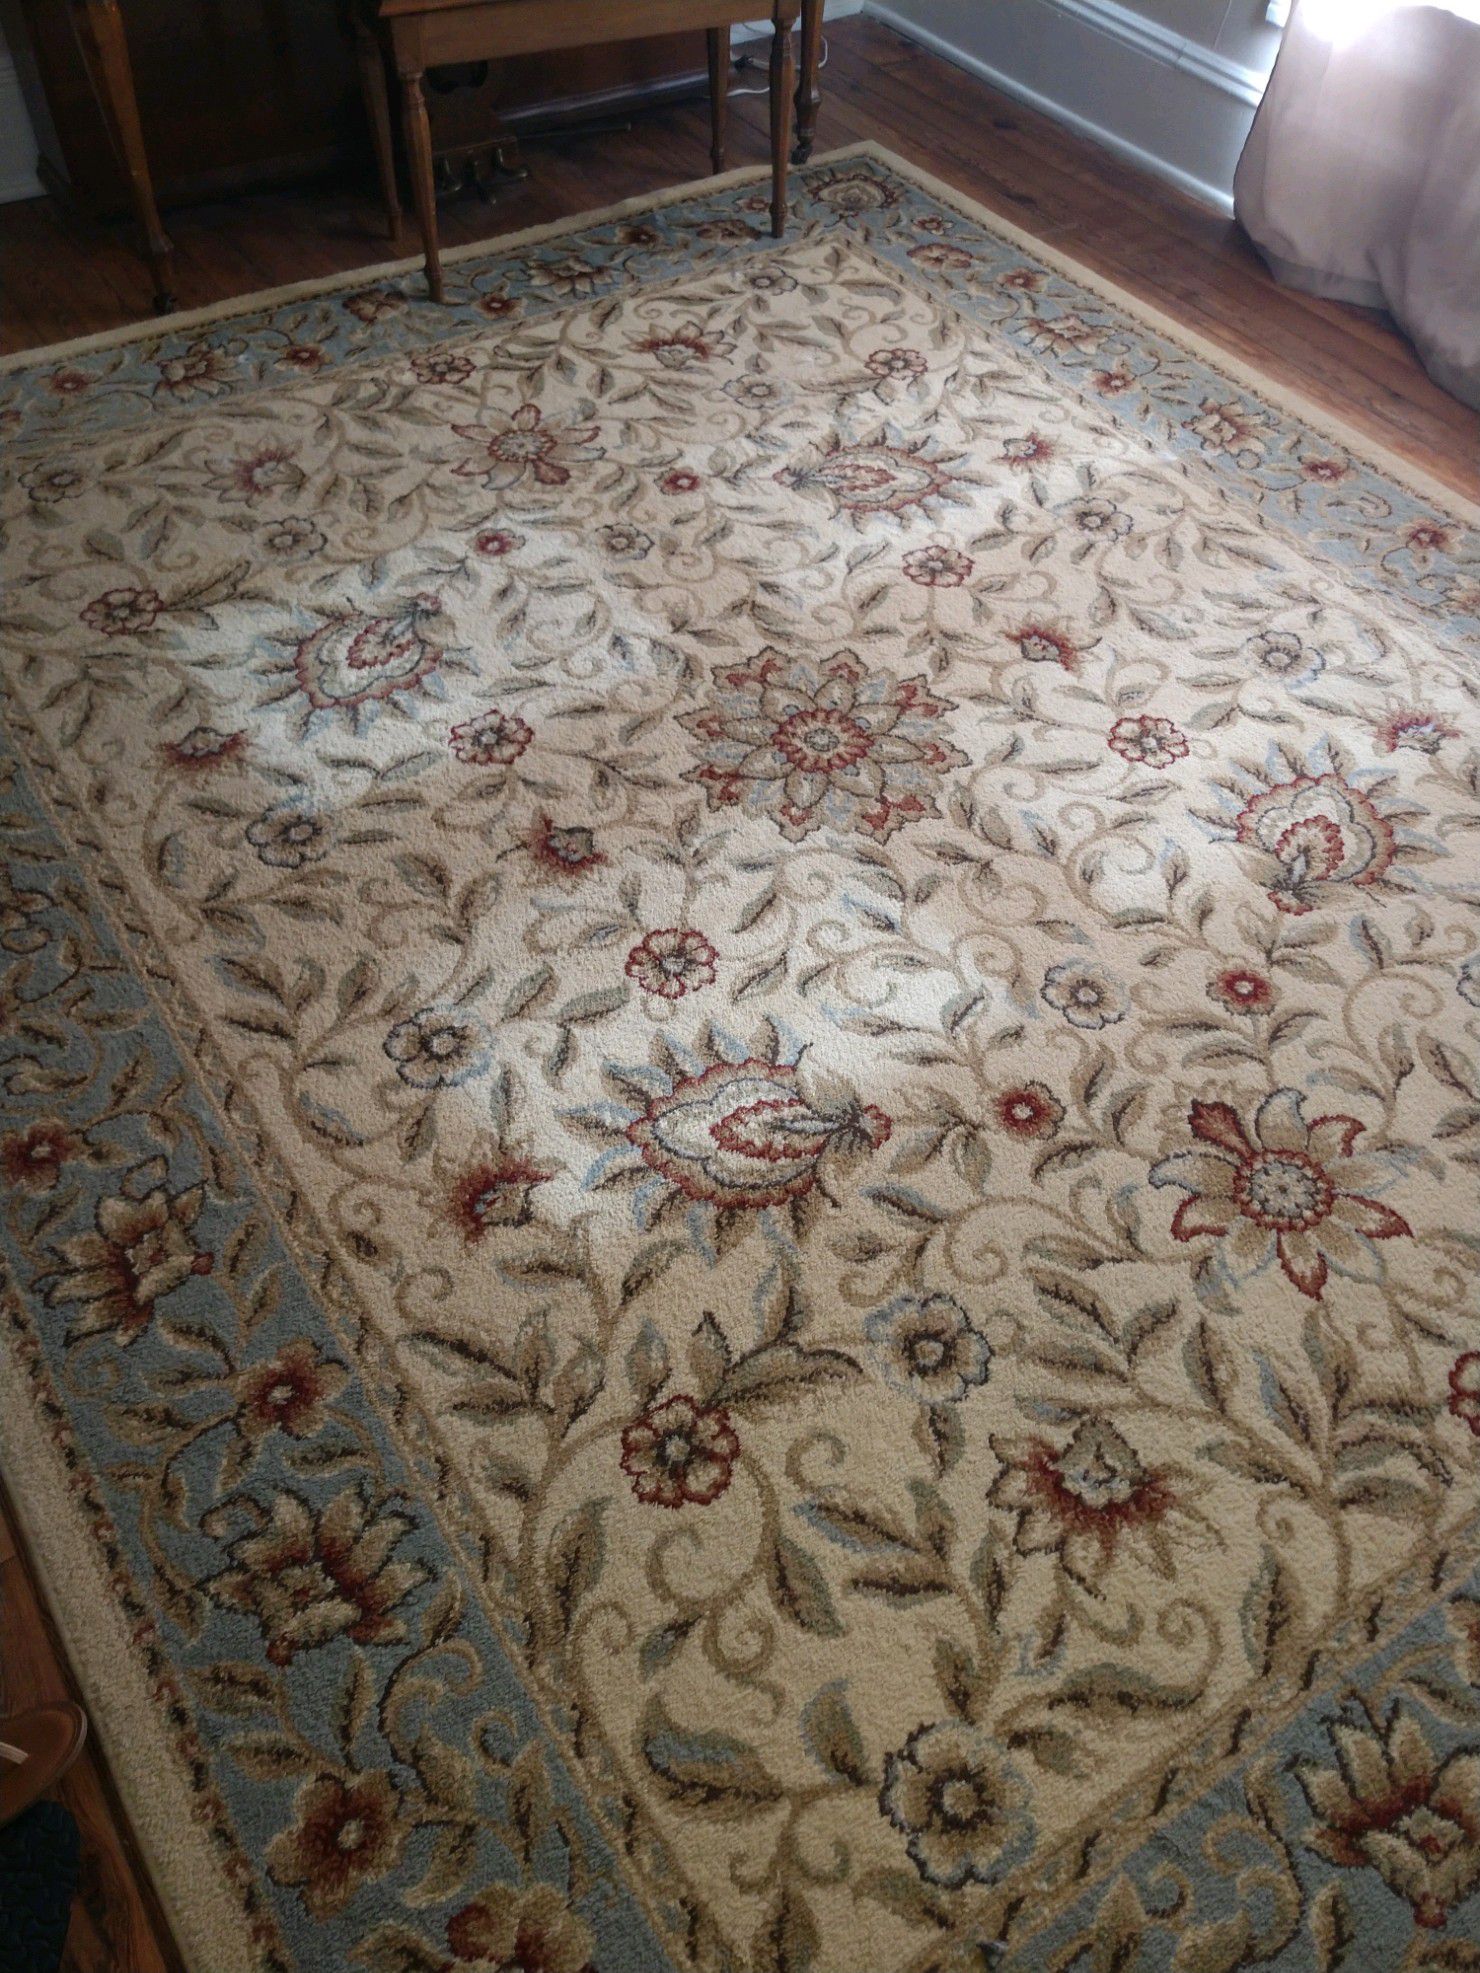 8x10 area rug, used good condition, smoke free home